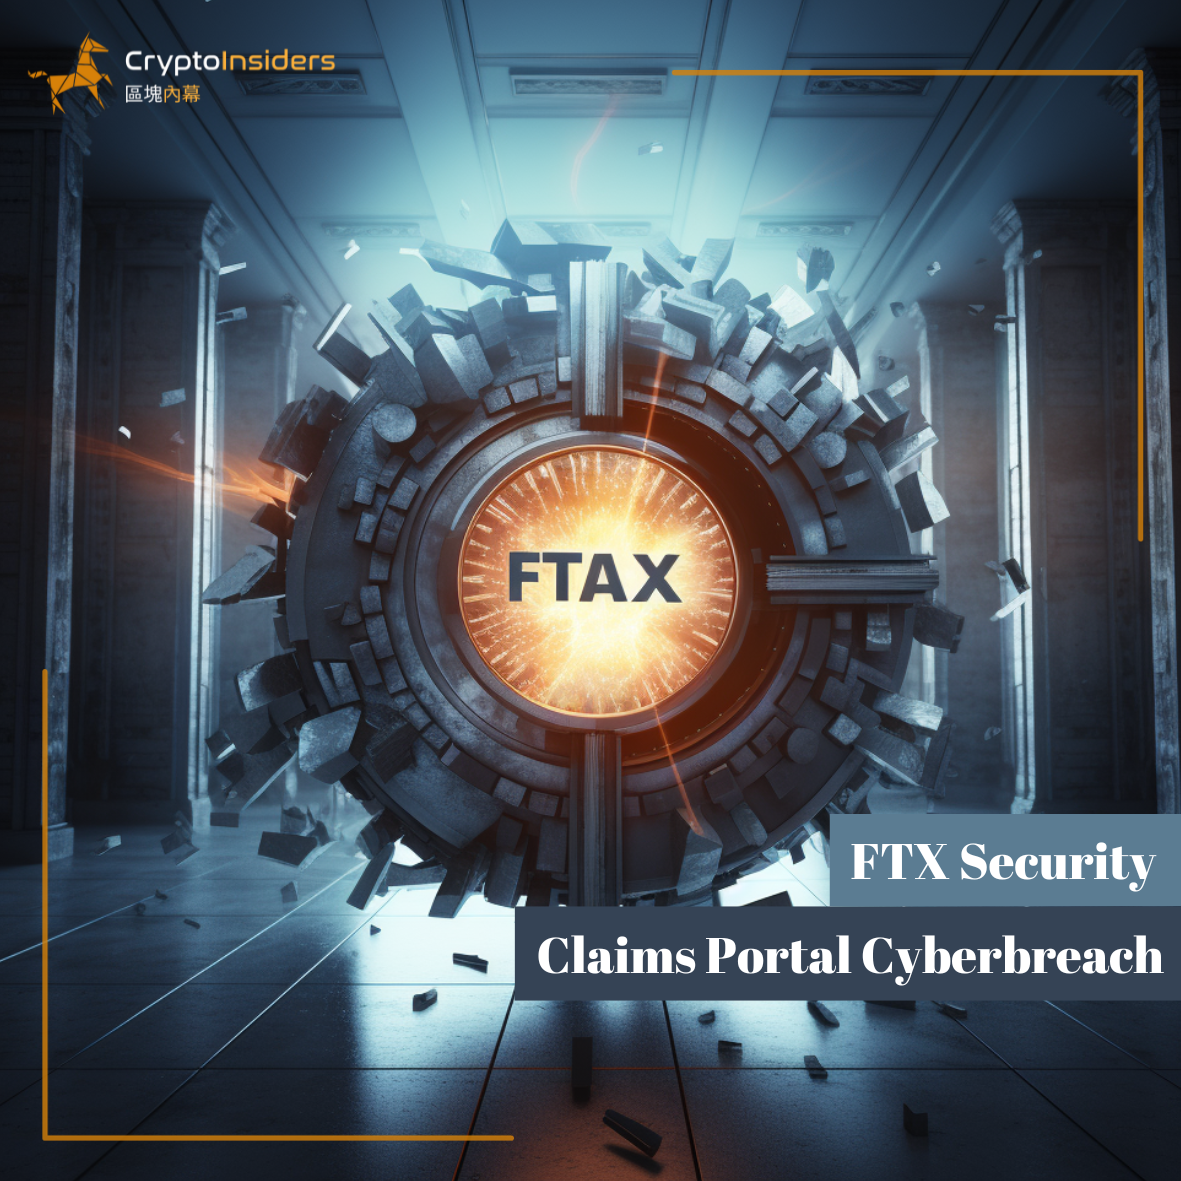 FTX-Security-Claims-Portal-Cyberbreach-Crypto-Insiders-Hong-Kong-Blockchain-News